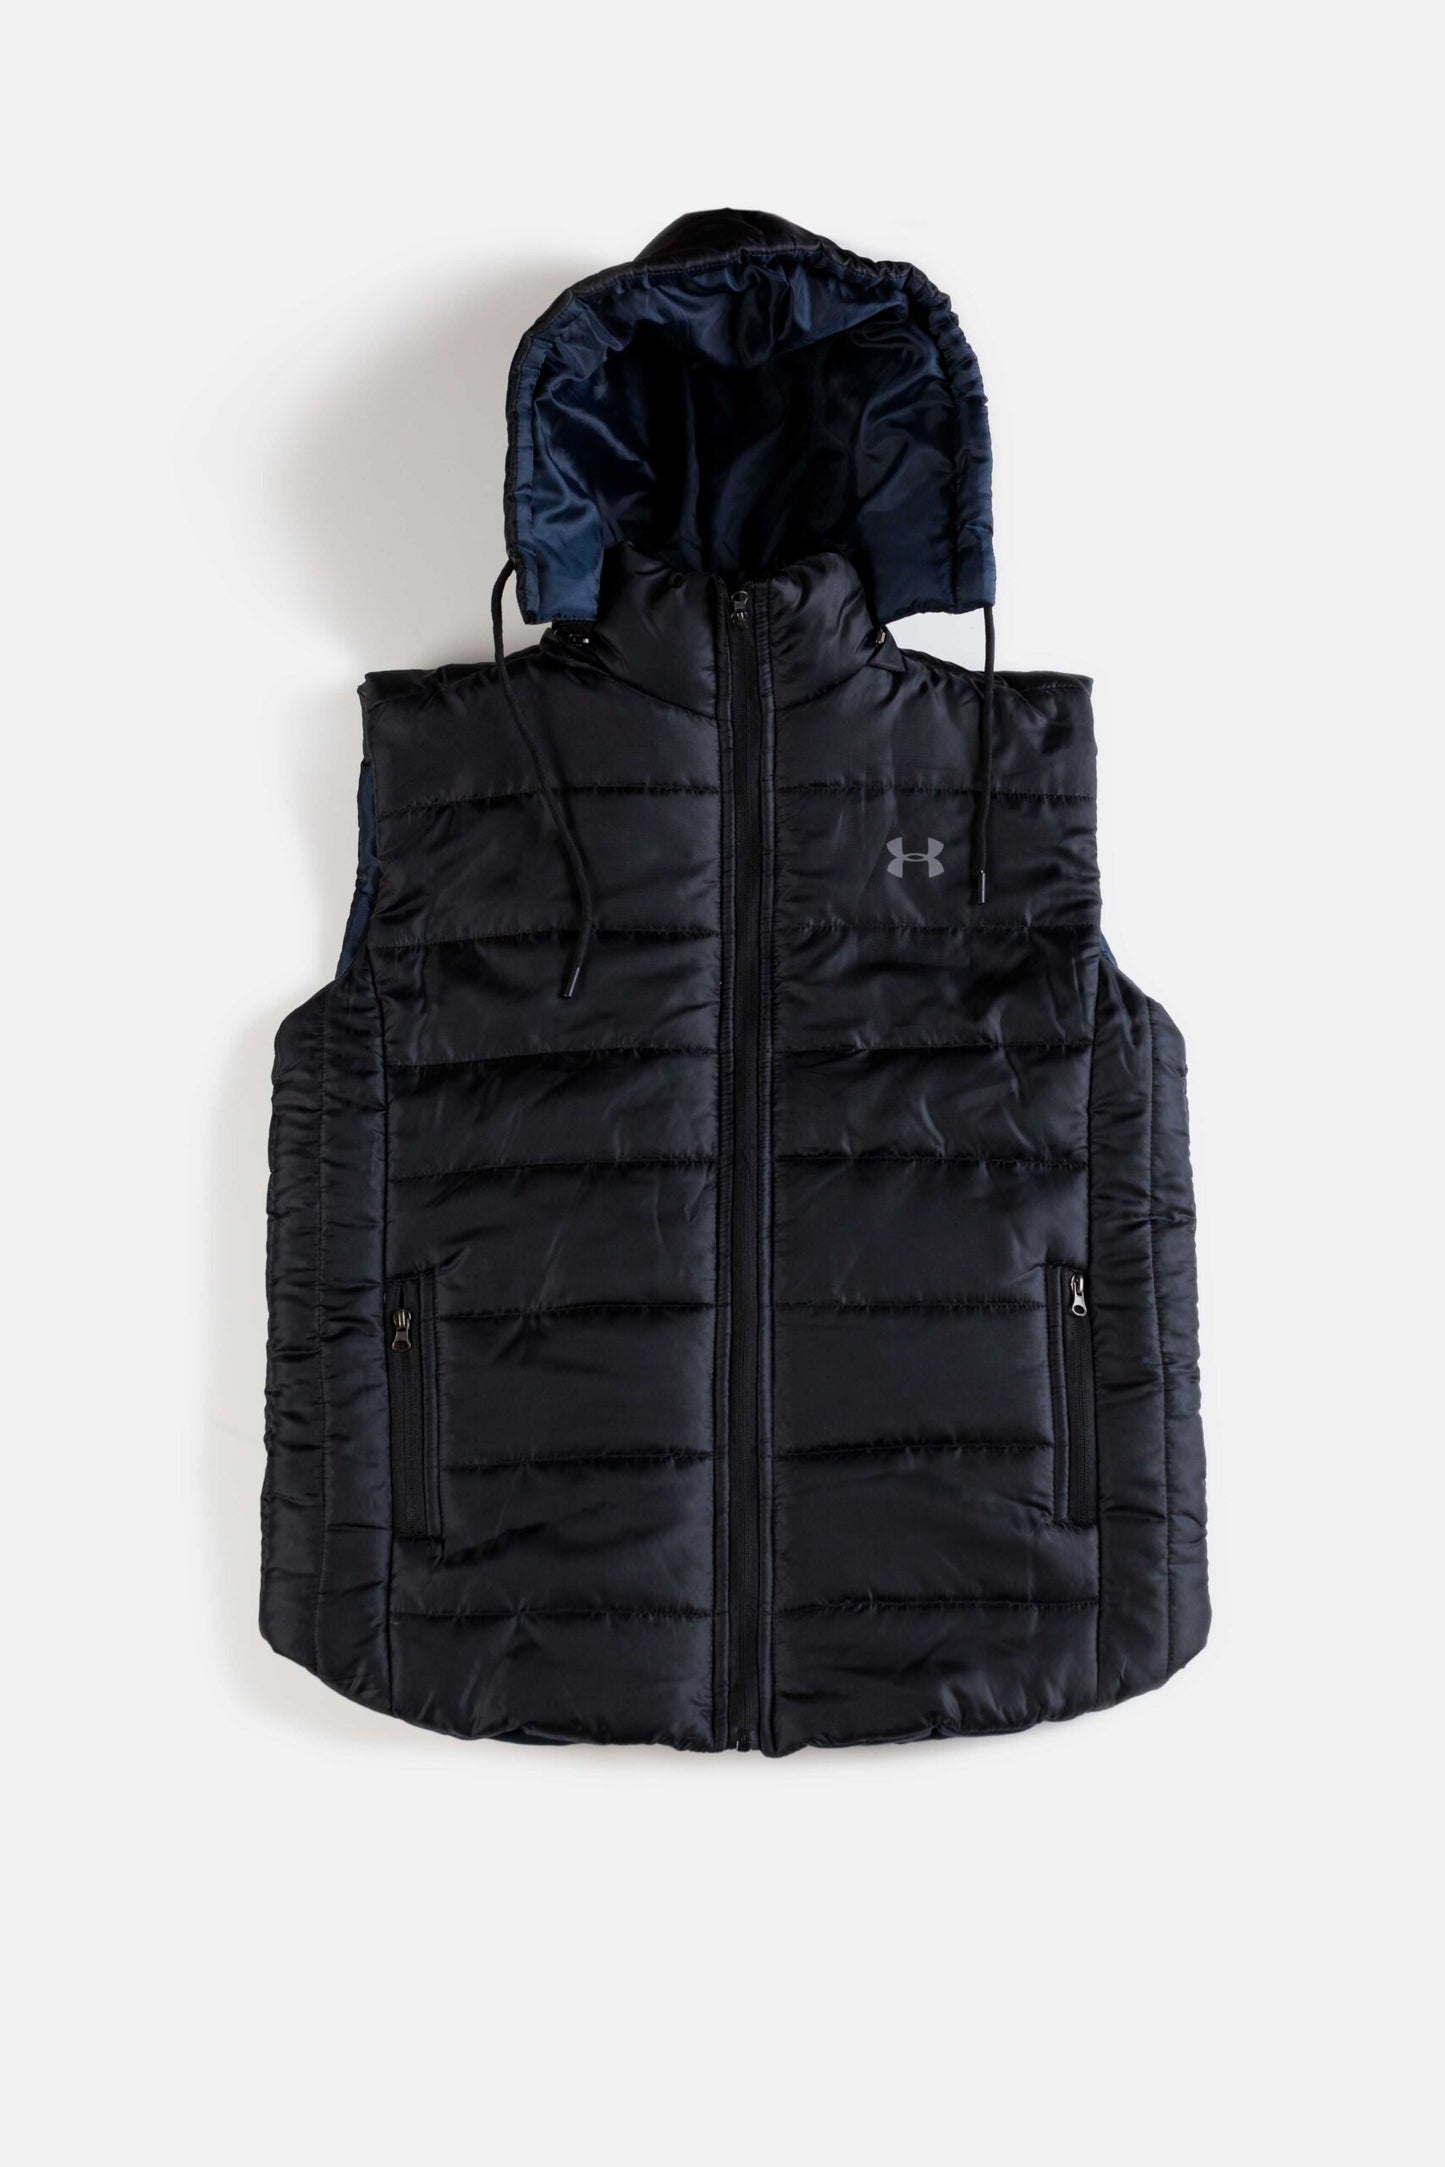 UA Premium Puffer Jacket With Hood – Black